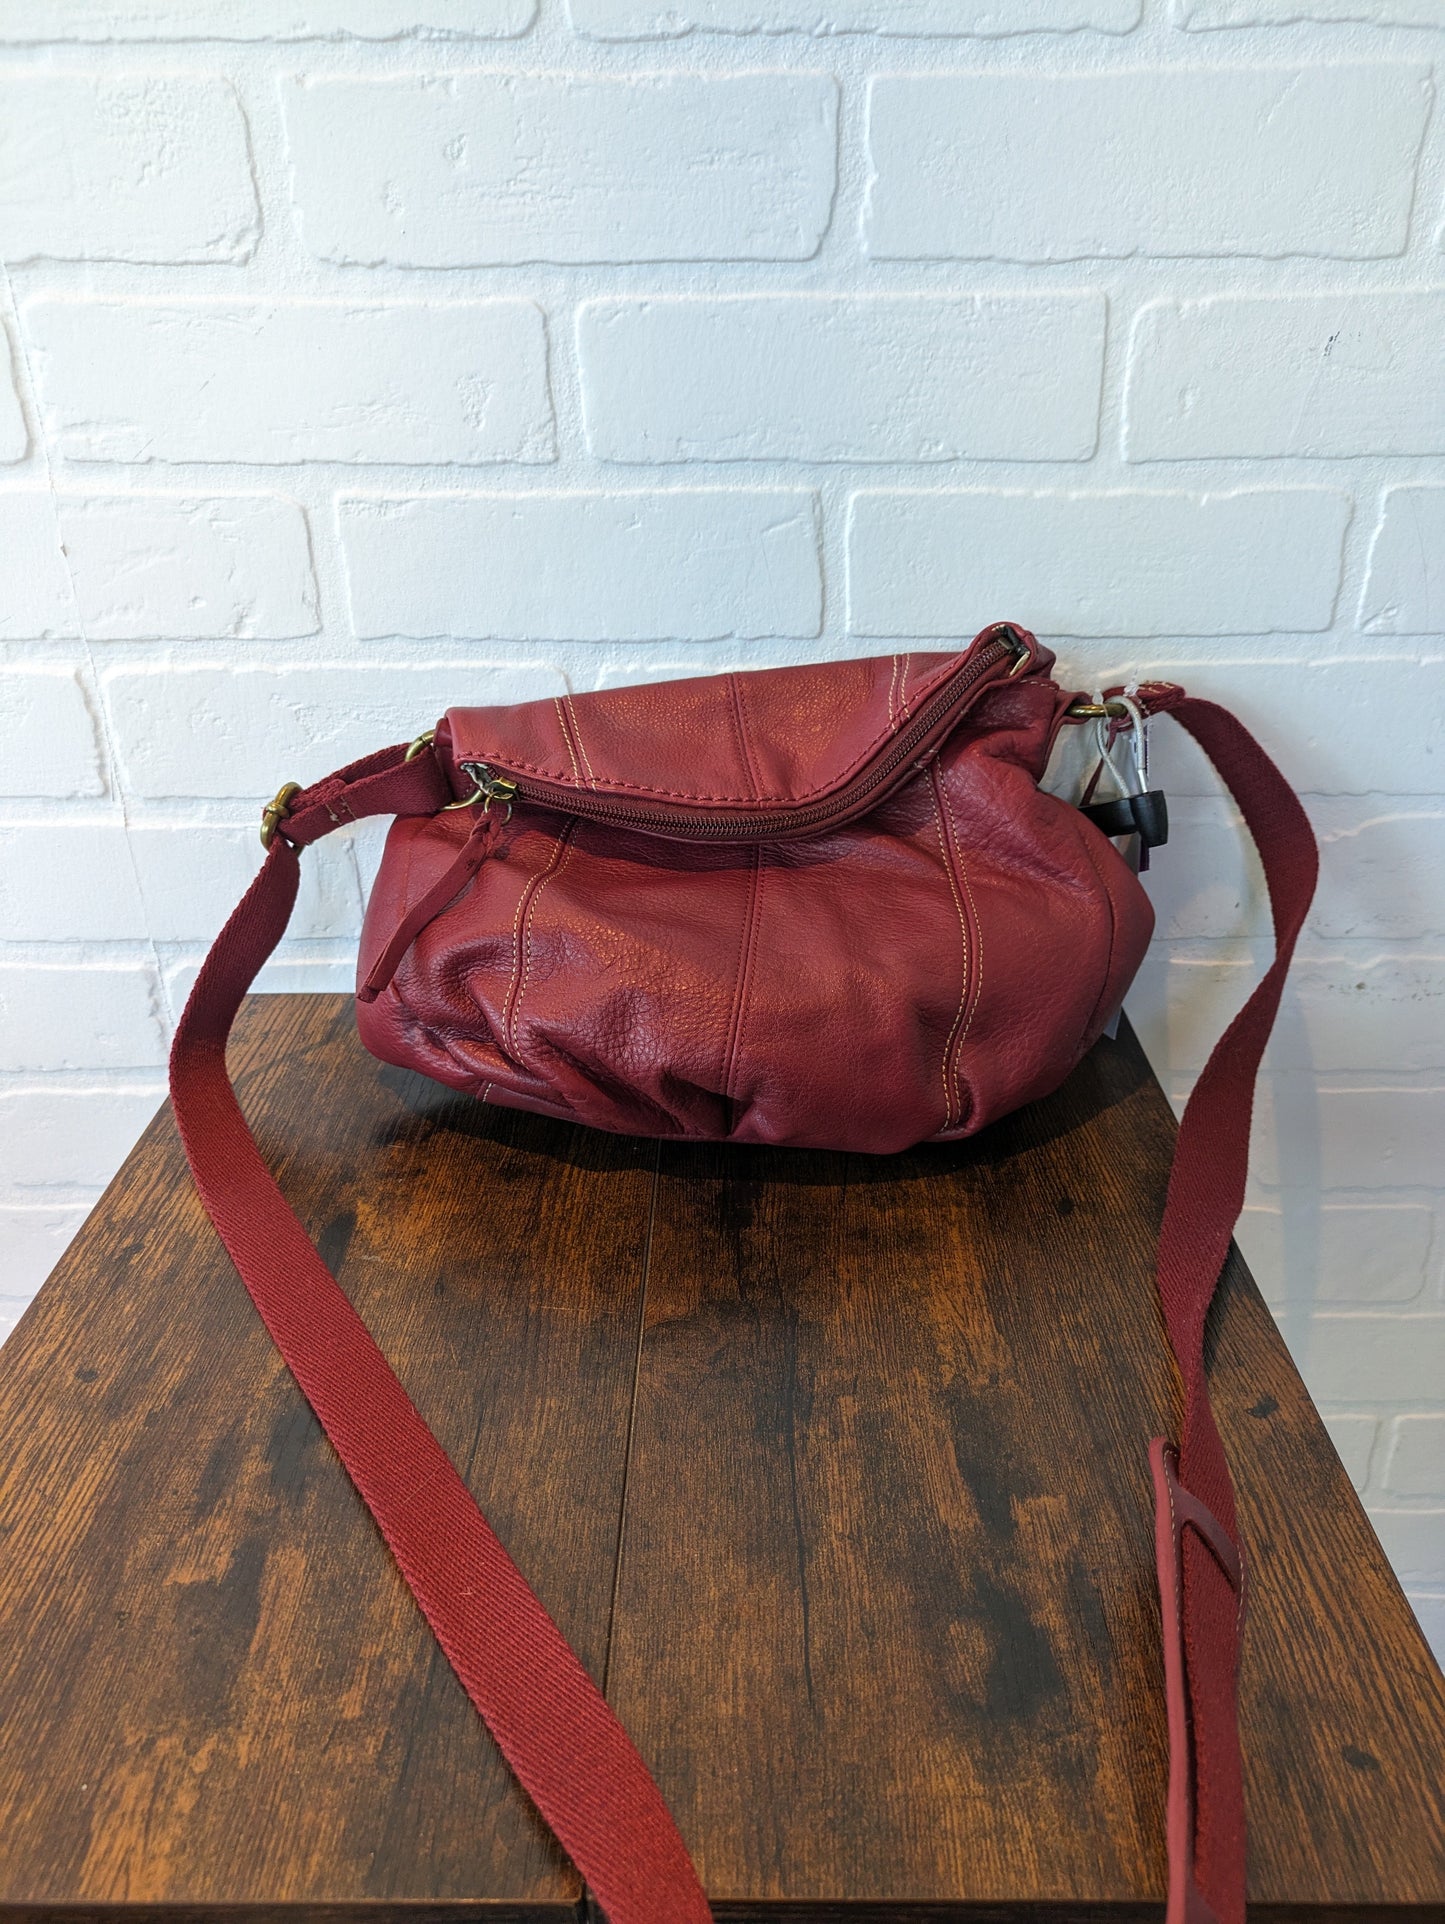 Handbag Leather The Sak, Size Medium